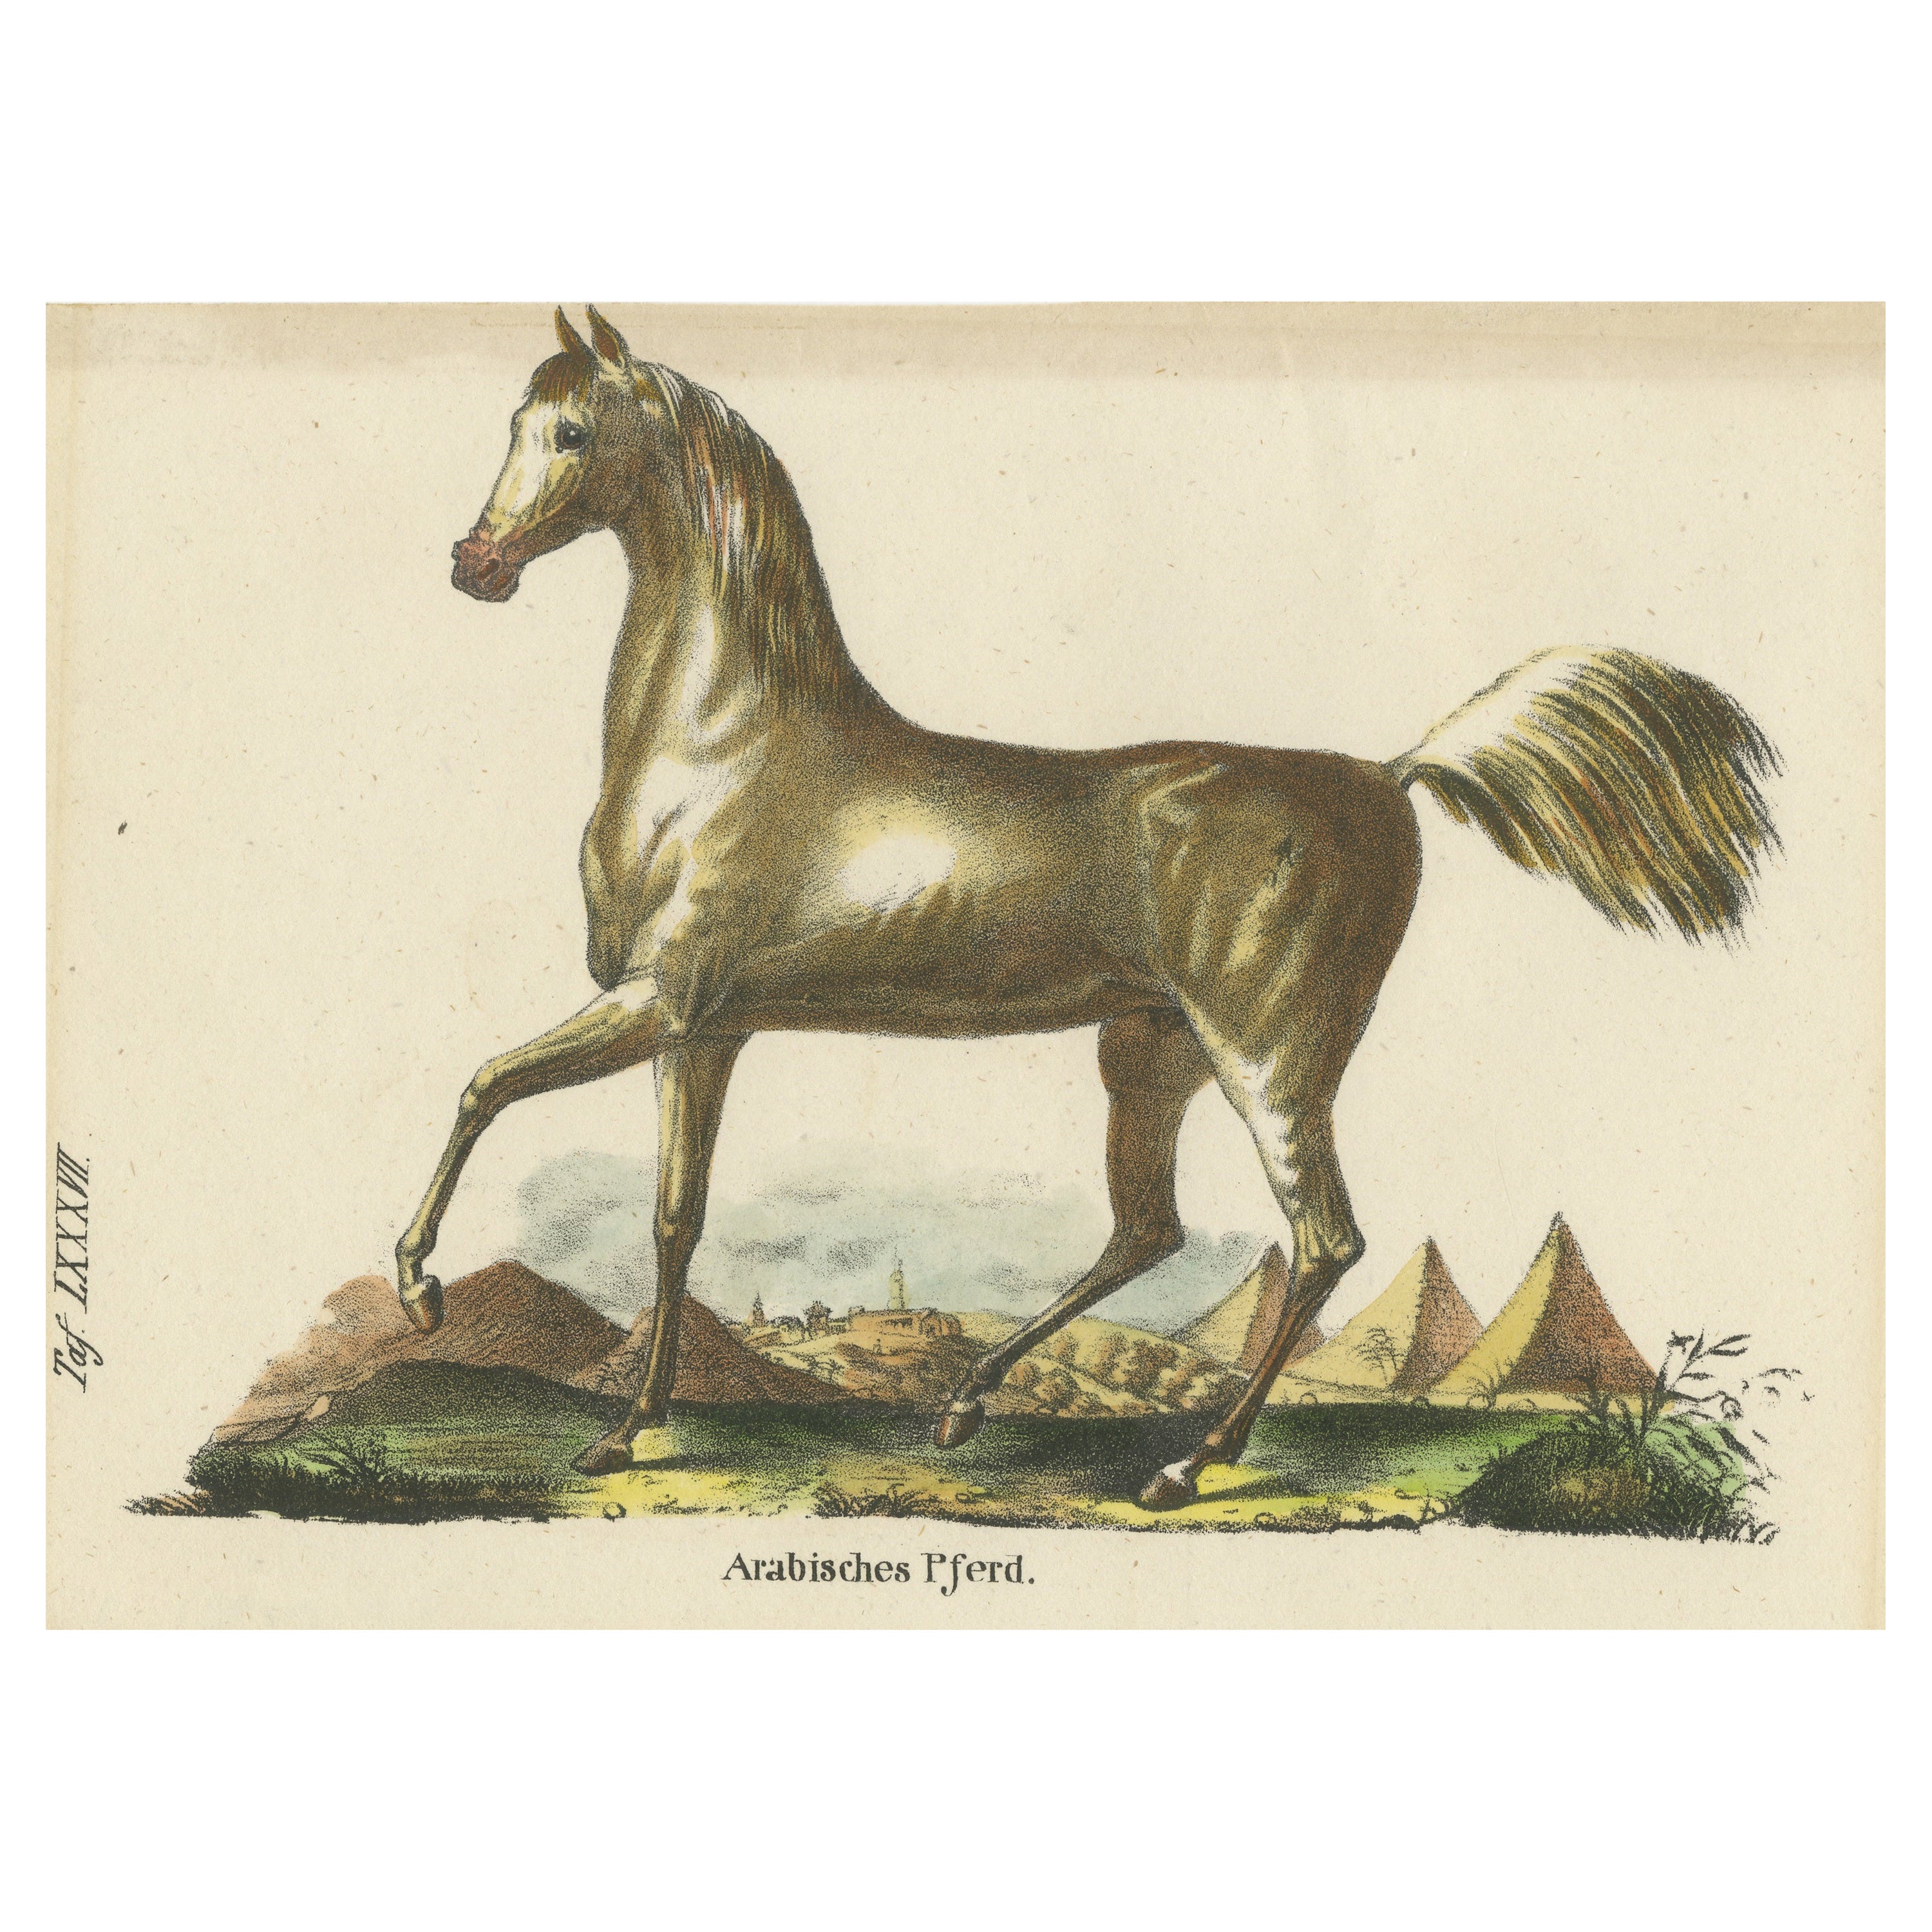 Antique Print of an Arabian Horse